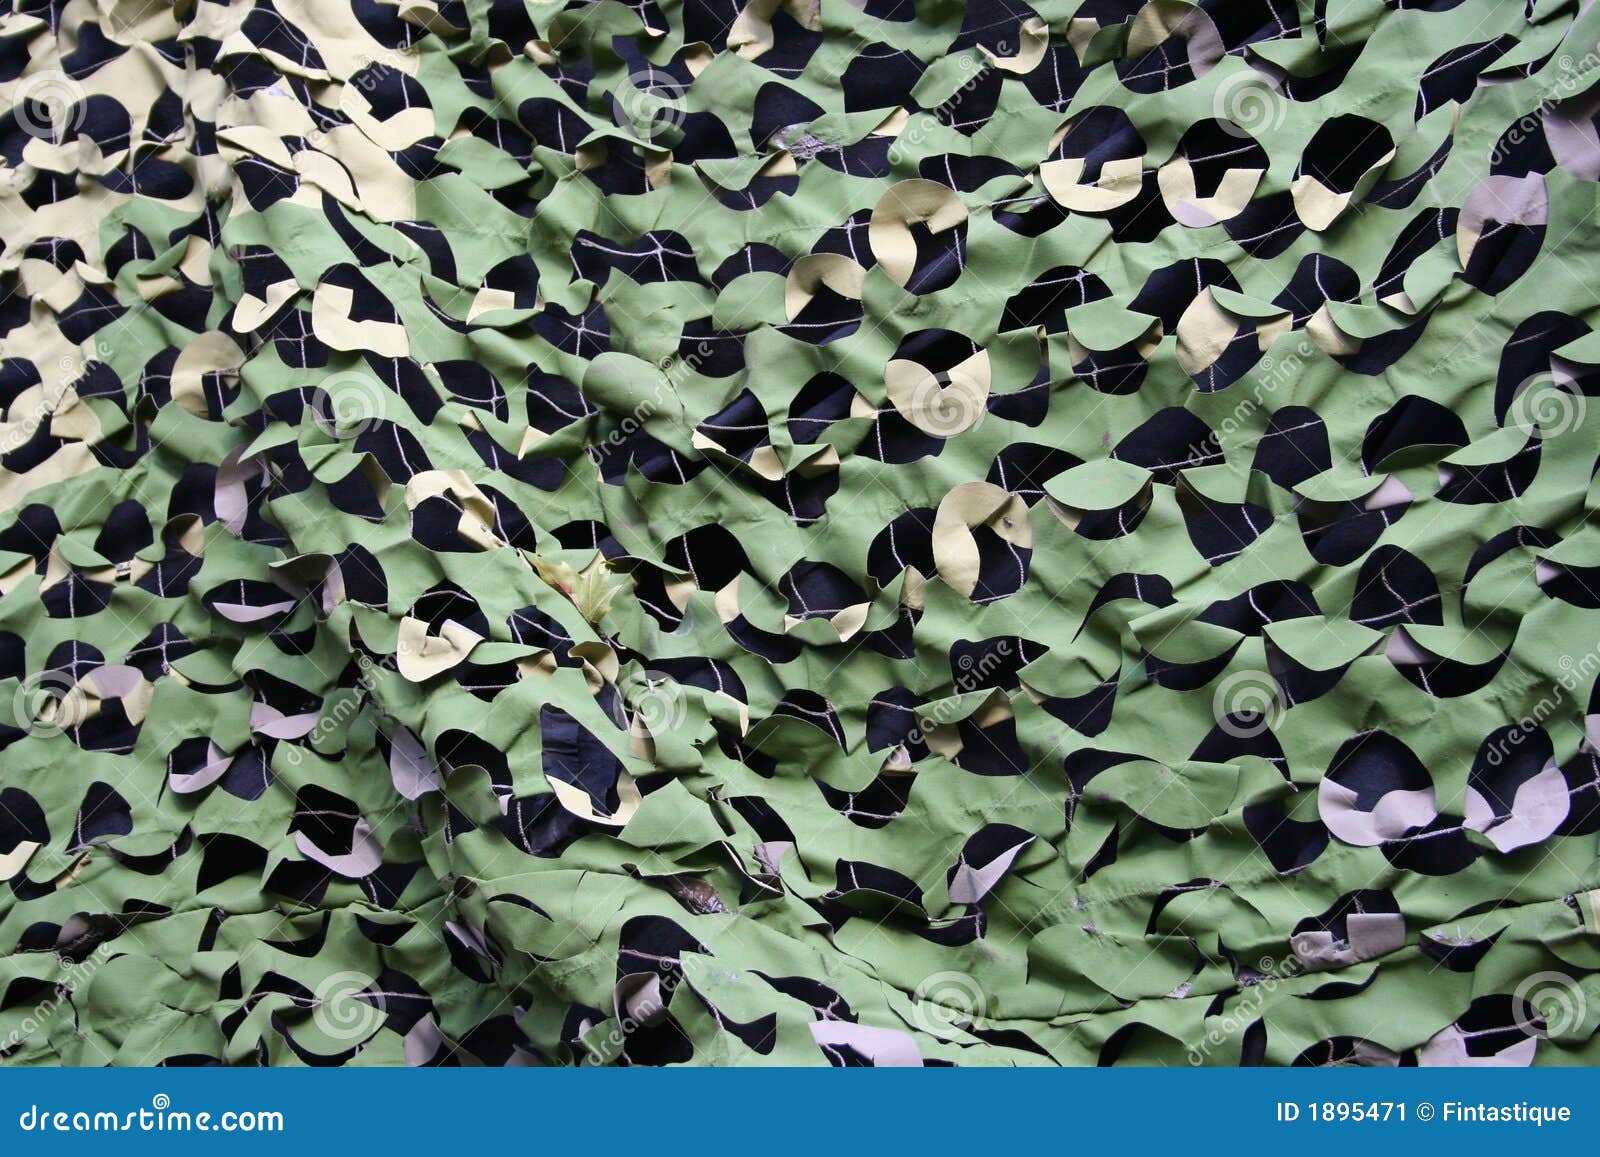 camouflage netting